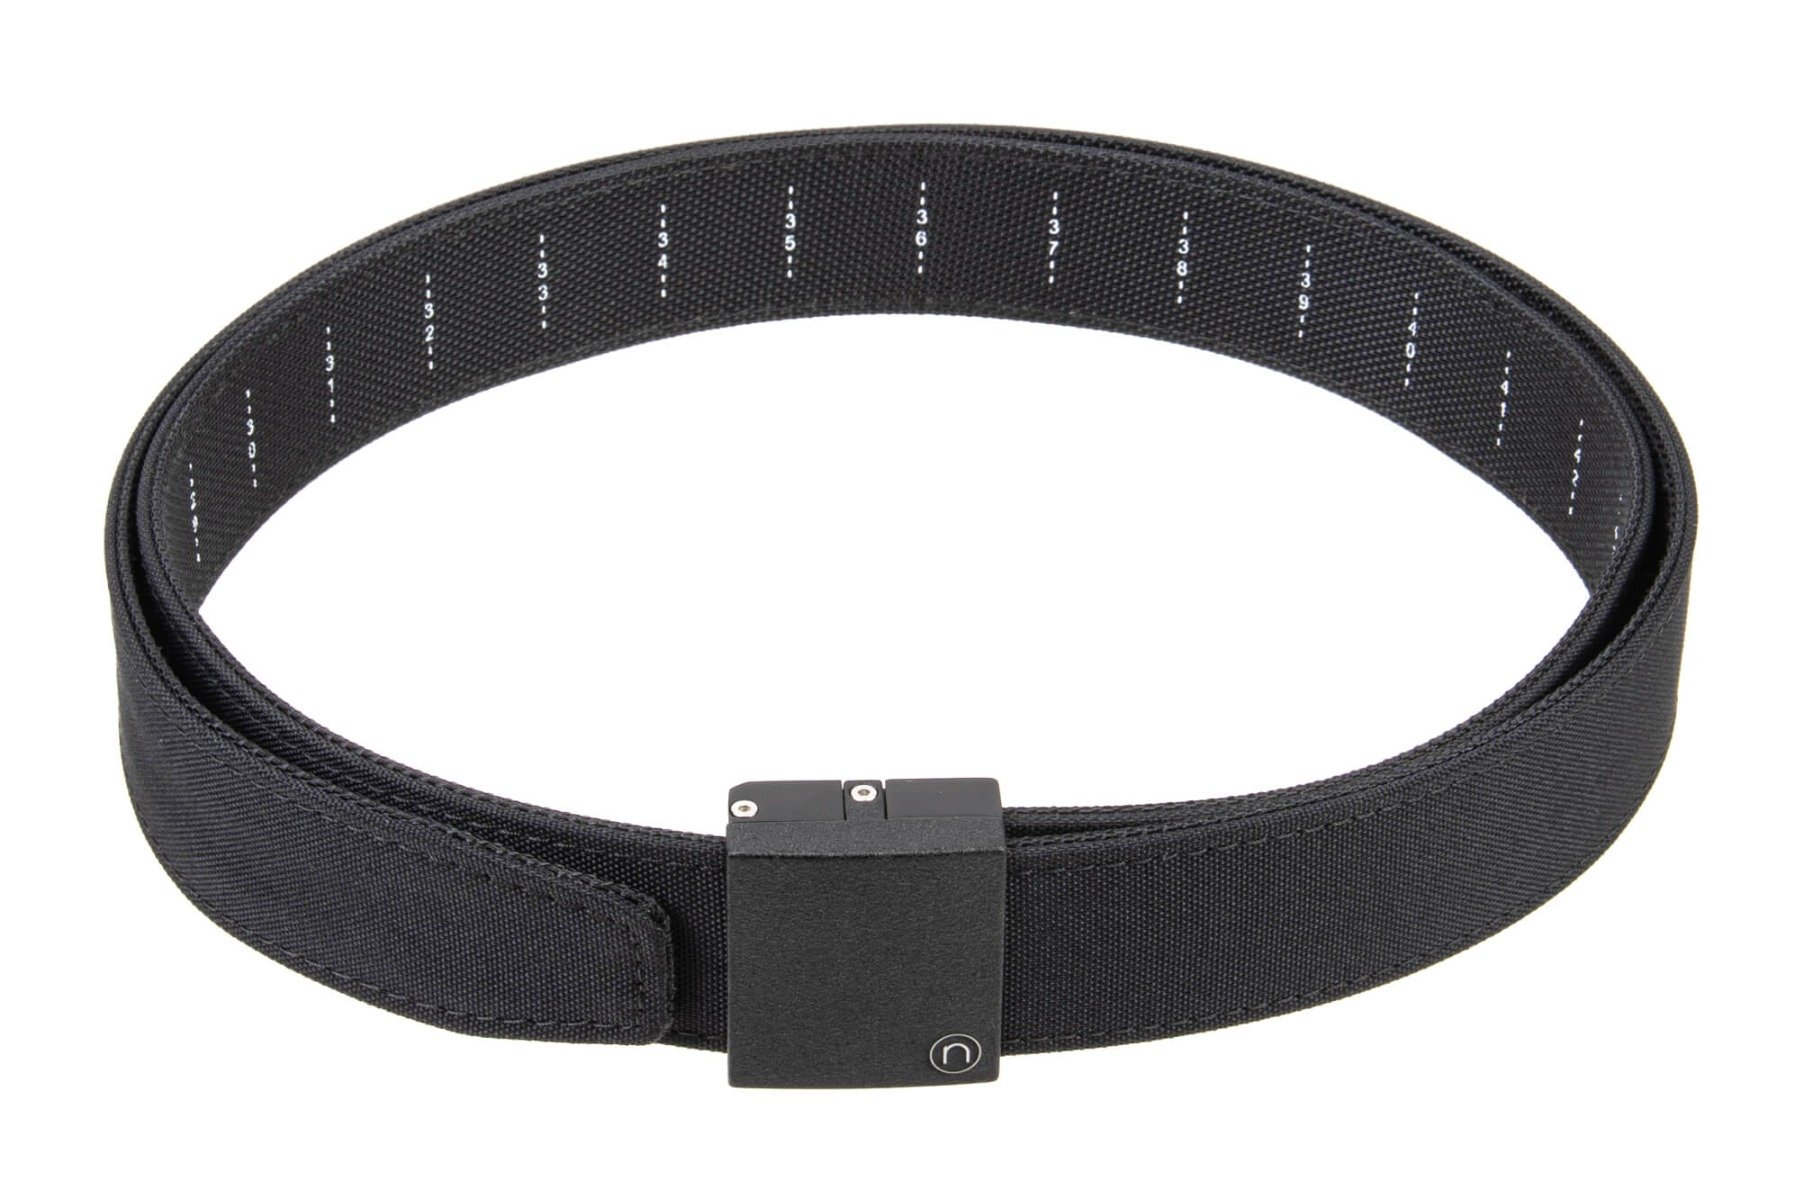  Nexbelt Men's Belt EDC Supreme Appendix Black 38mm Nylon Gun  Utility Harness Ratchet Belt for Concealed Carry : Sports & Outdoors